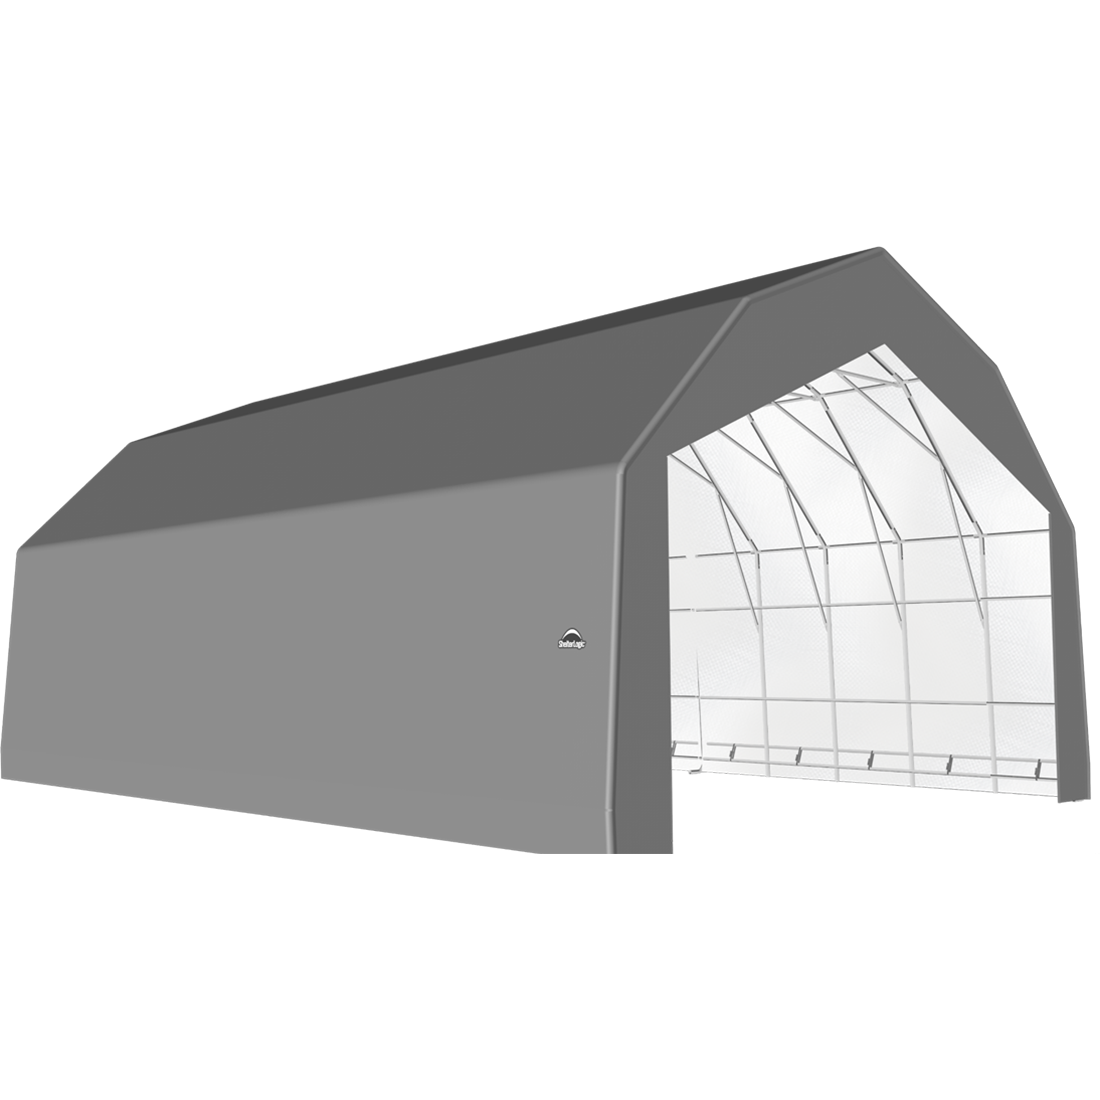 ShelterTech SP Series Barn Shelter, 30 ft. x 32 ft. x 21 ft. Heavy Duty PVC 14.5 oz. Gray